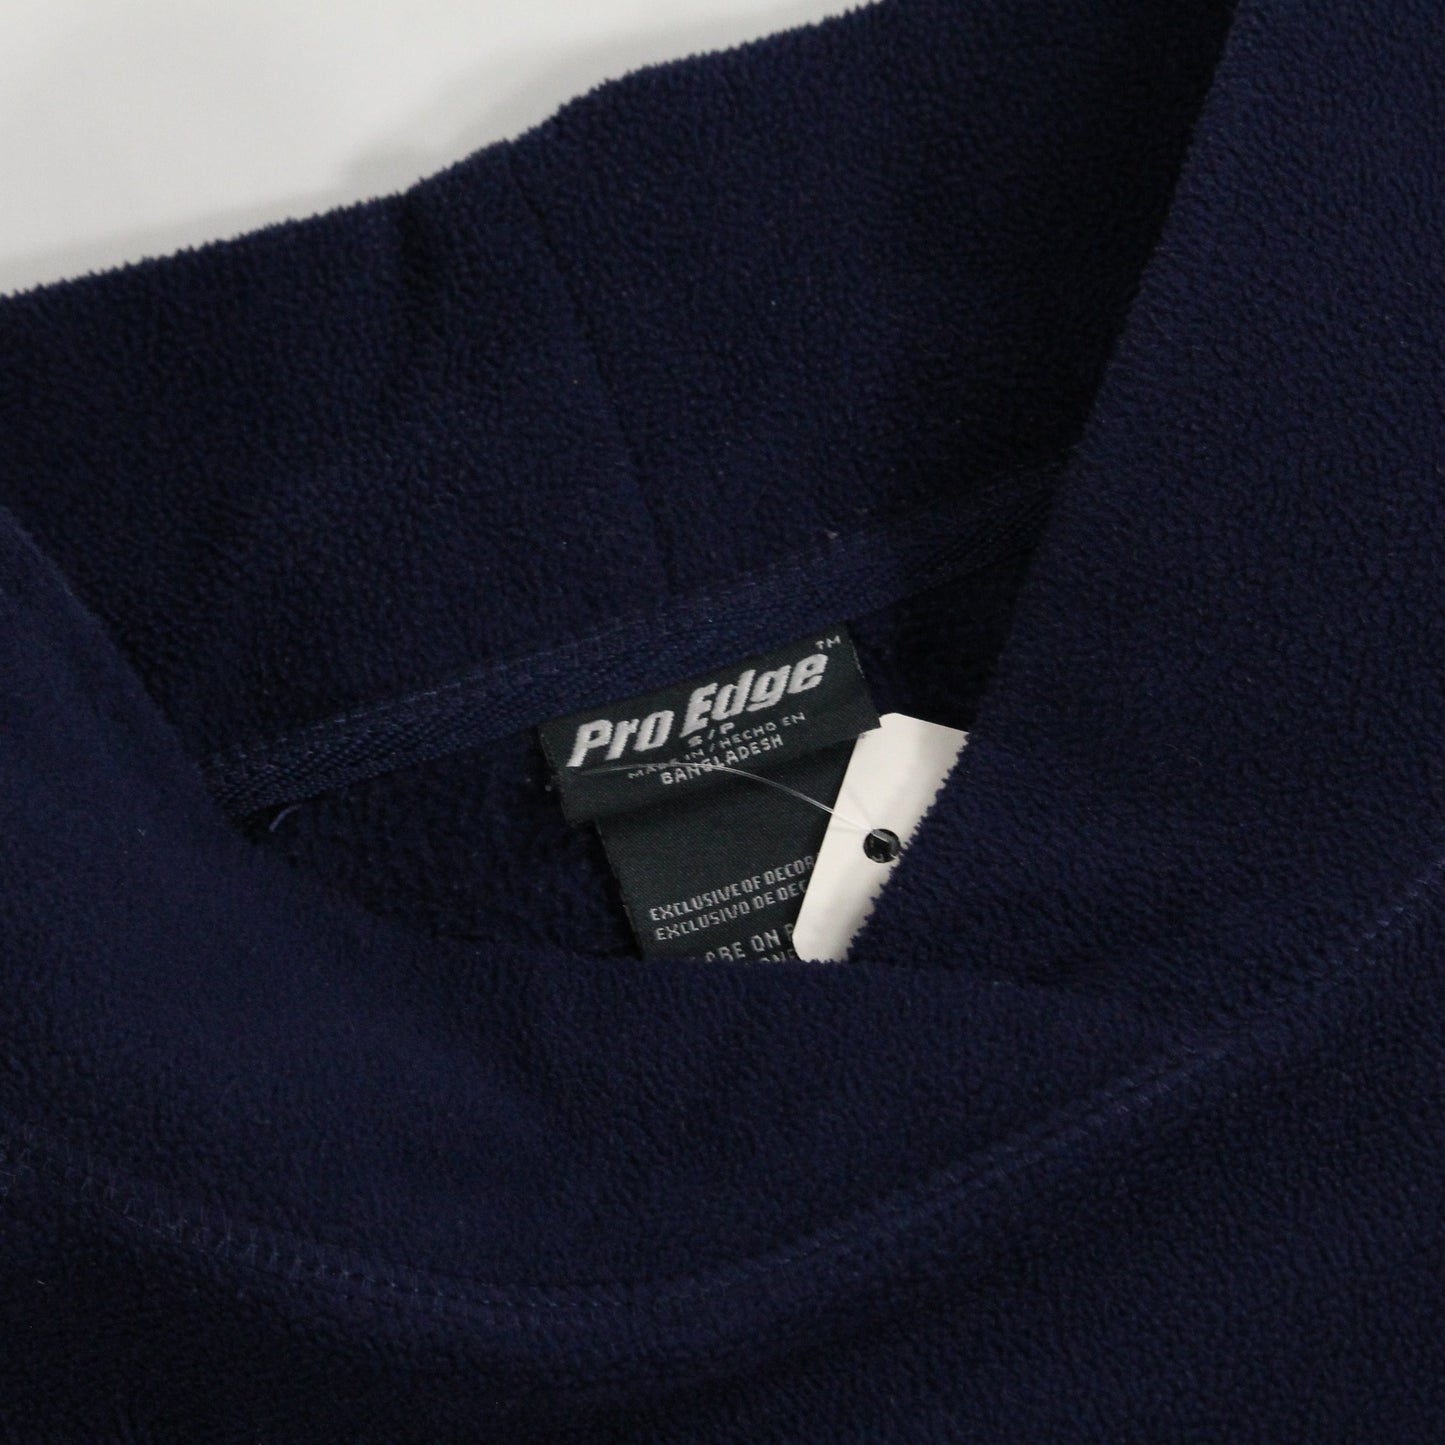 Collegiate Penn State University Fleece Pullover Sweater Size Small